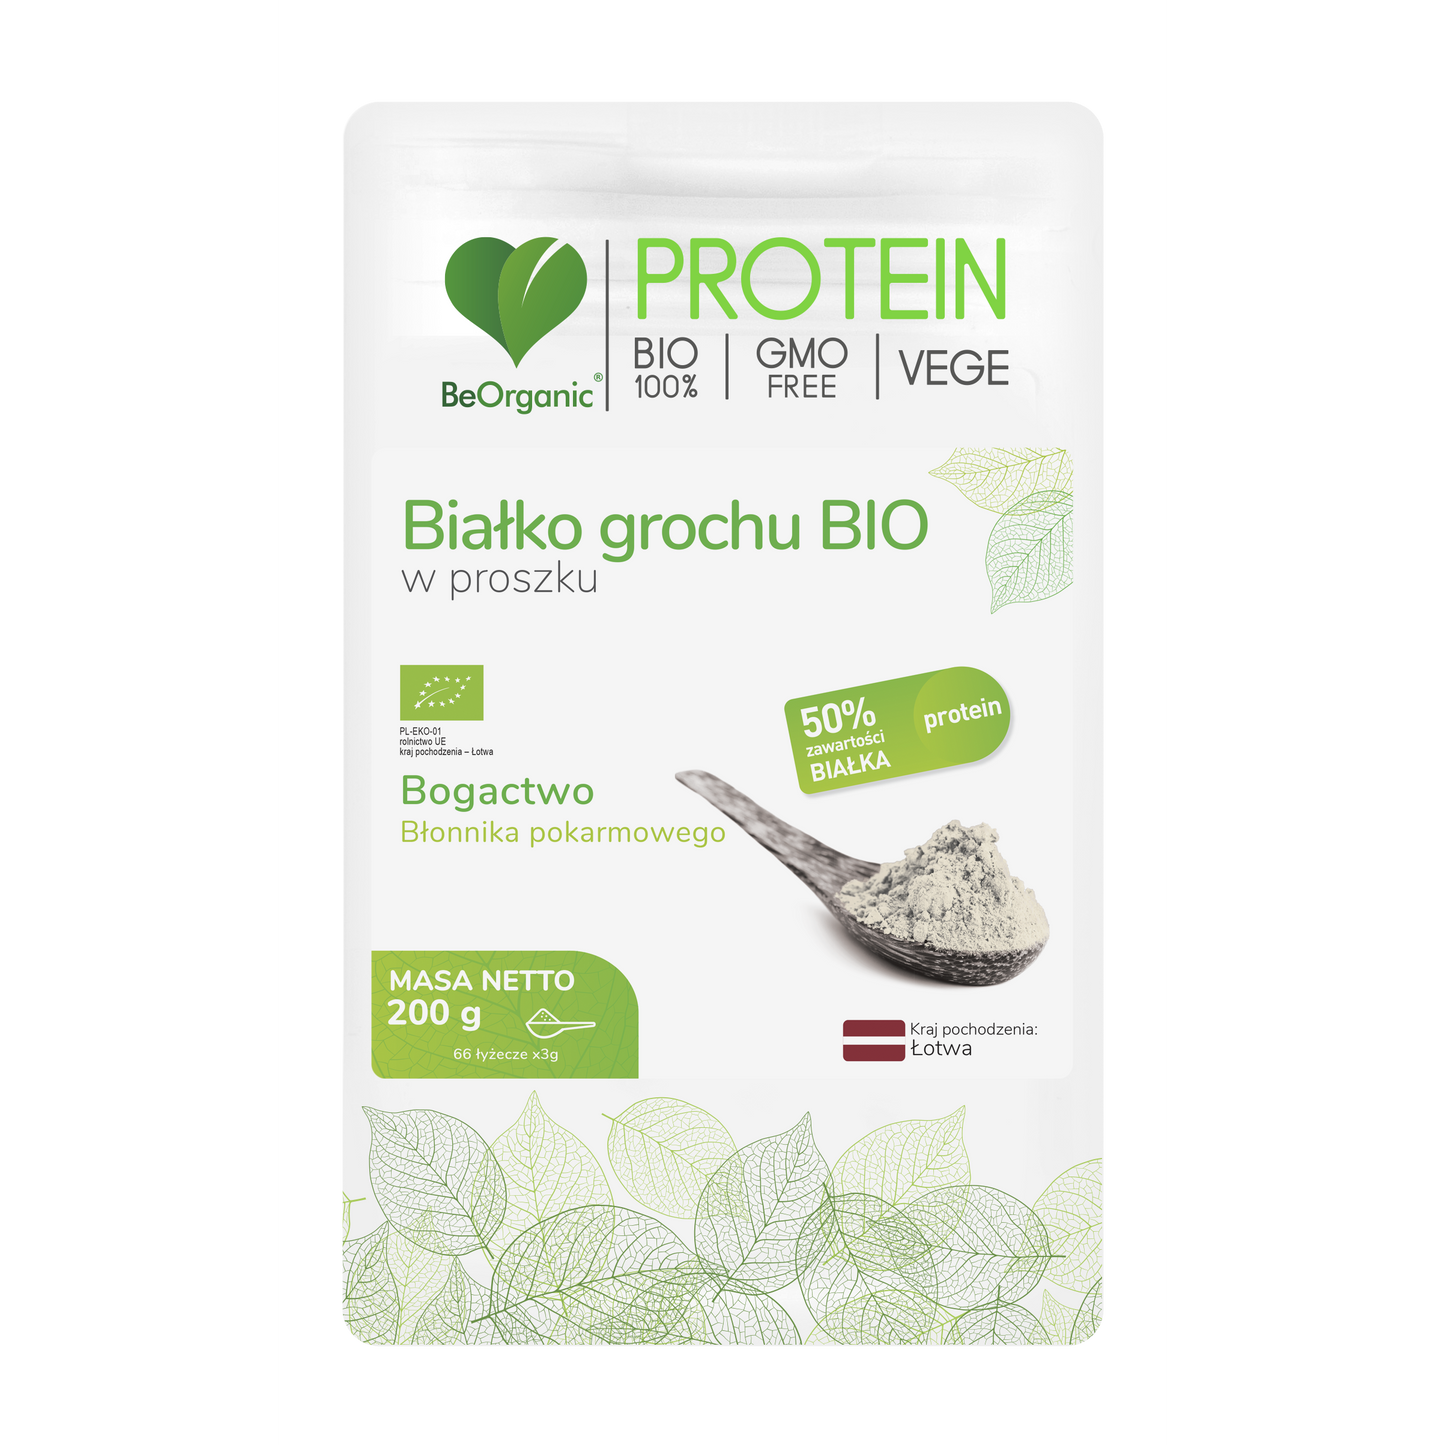 BeOrganic Pea Protein Powder, 200g